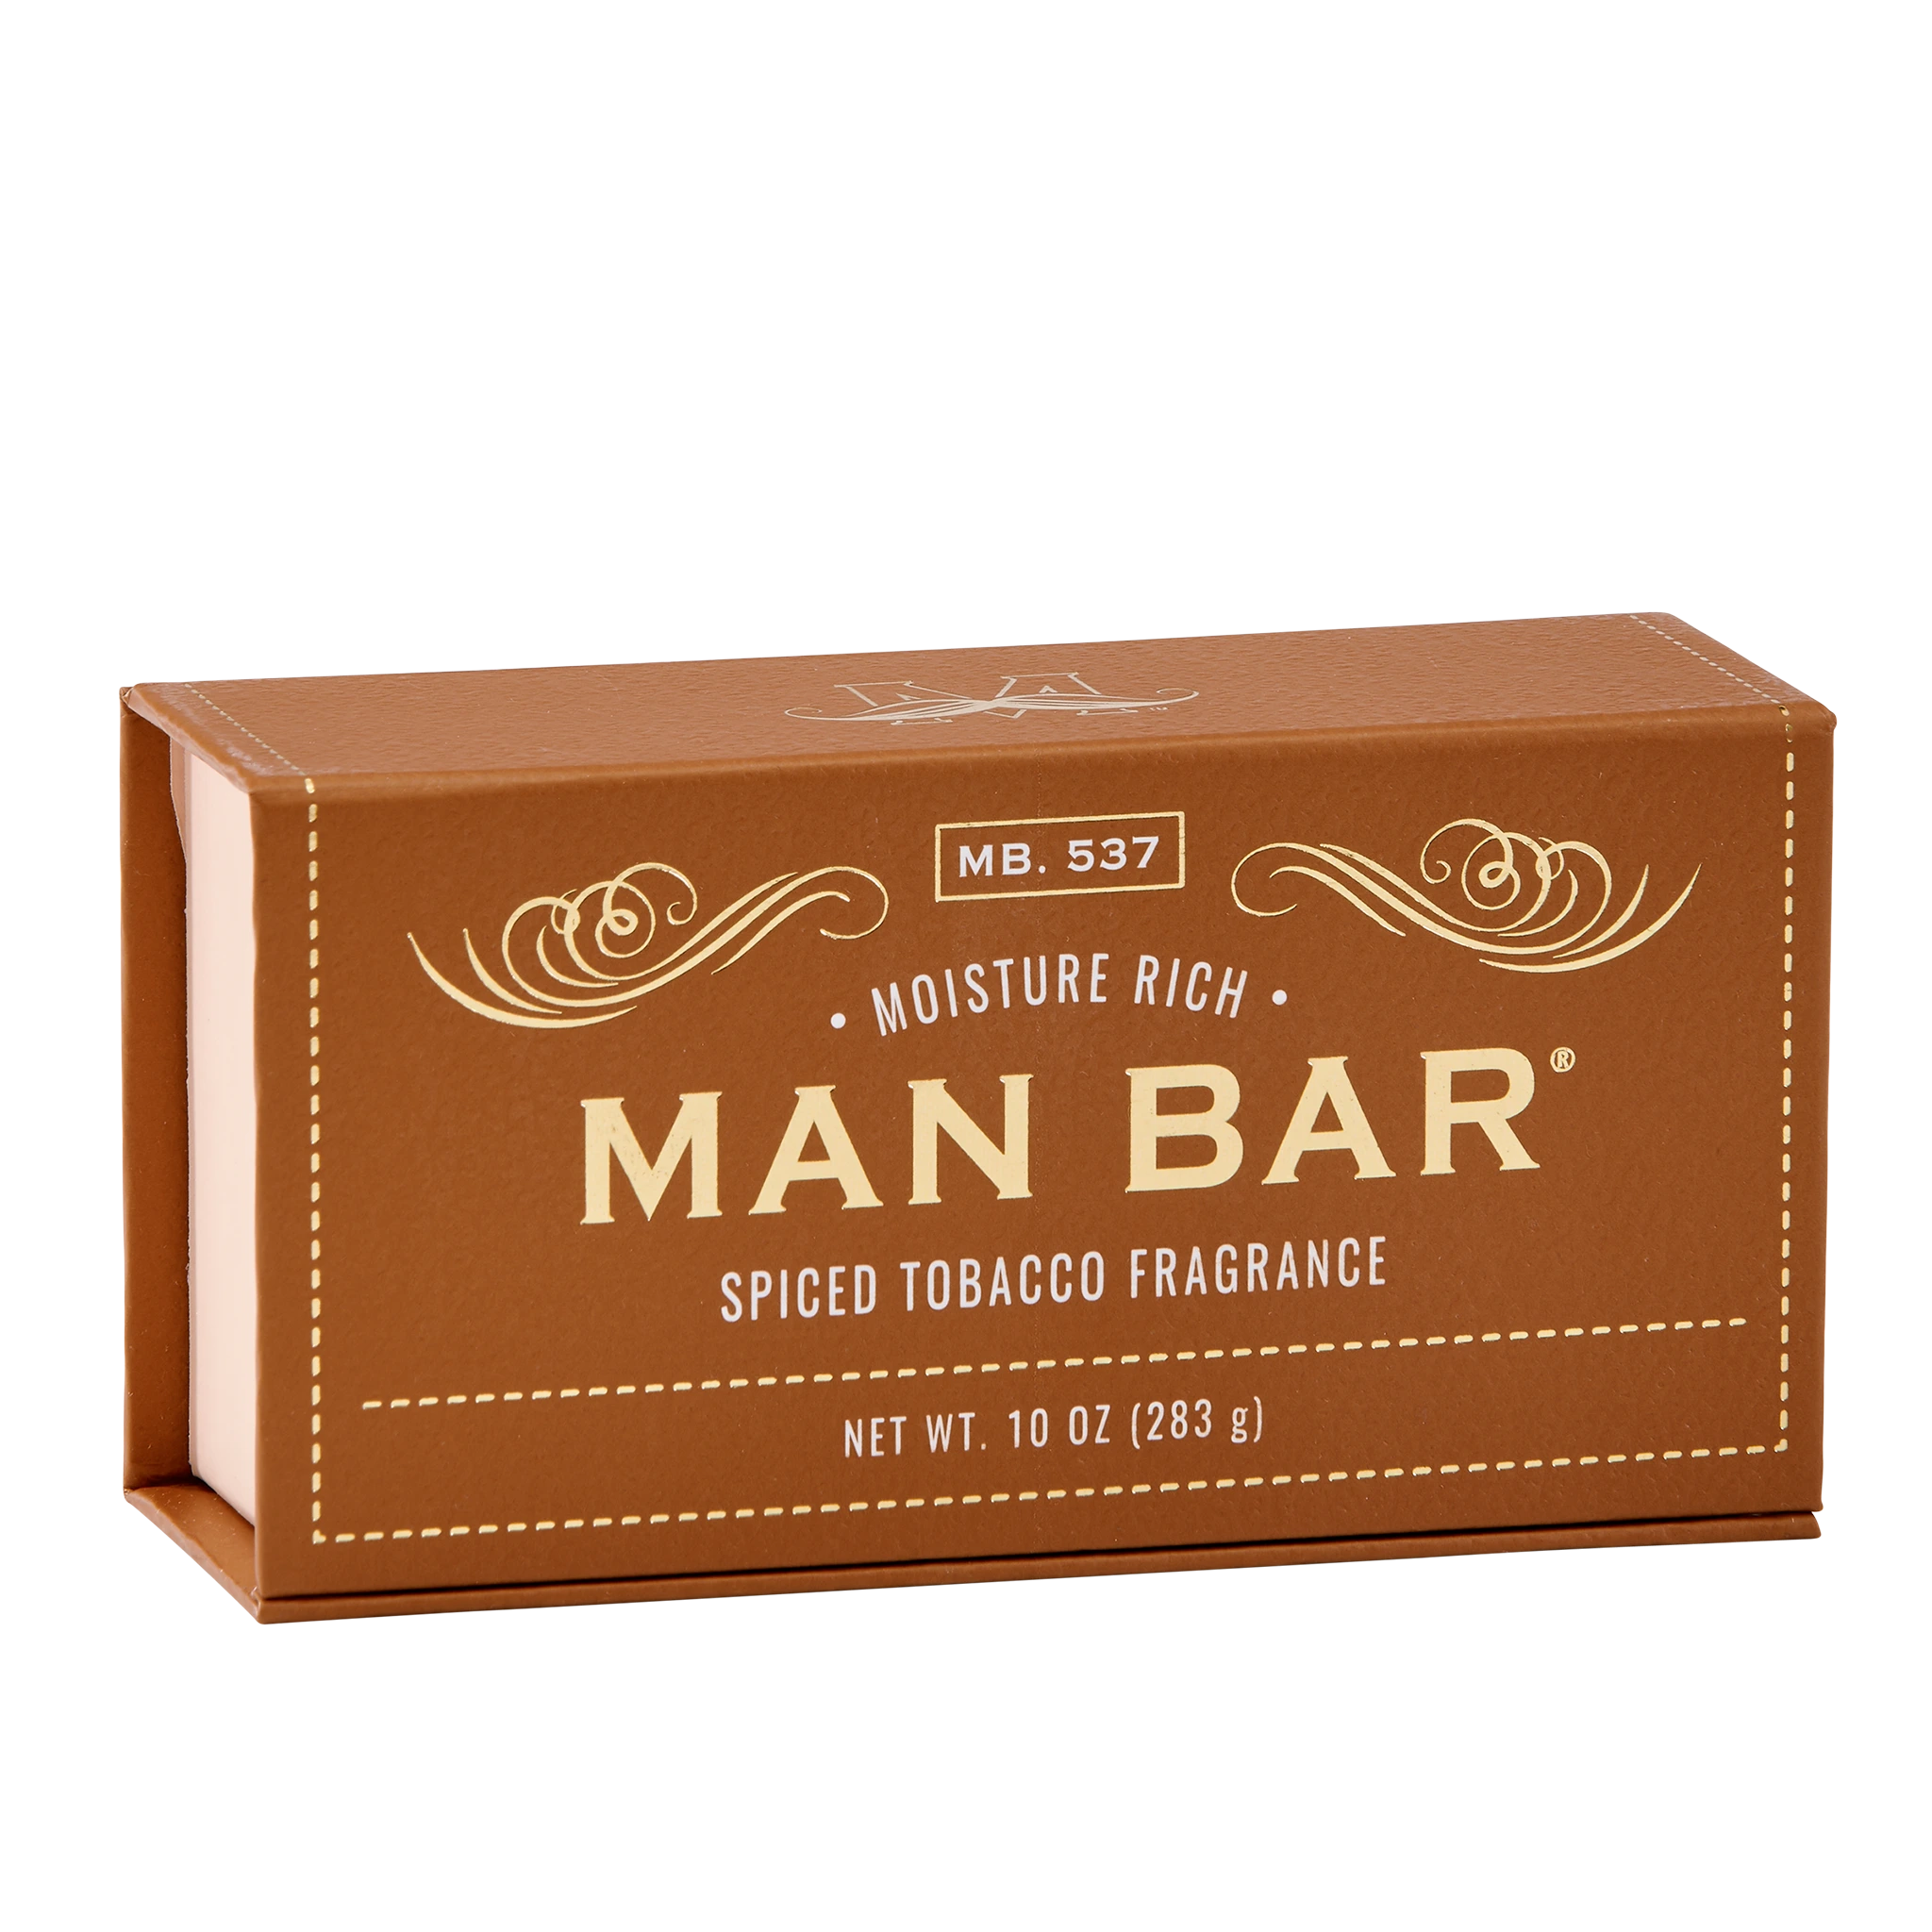 San Francisco Soap Co. Man Bar Moisture Rich Spiced Tobacco Soap, Gifts